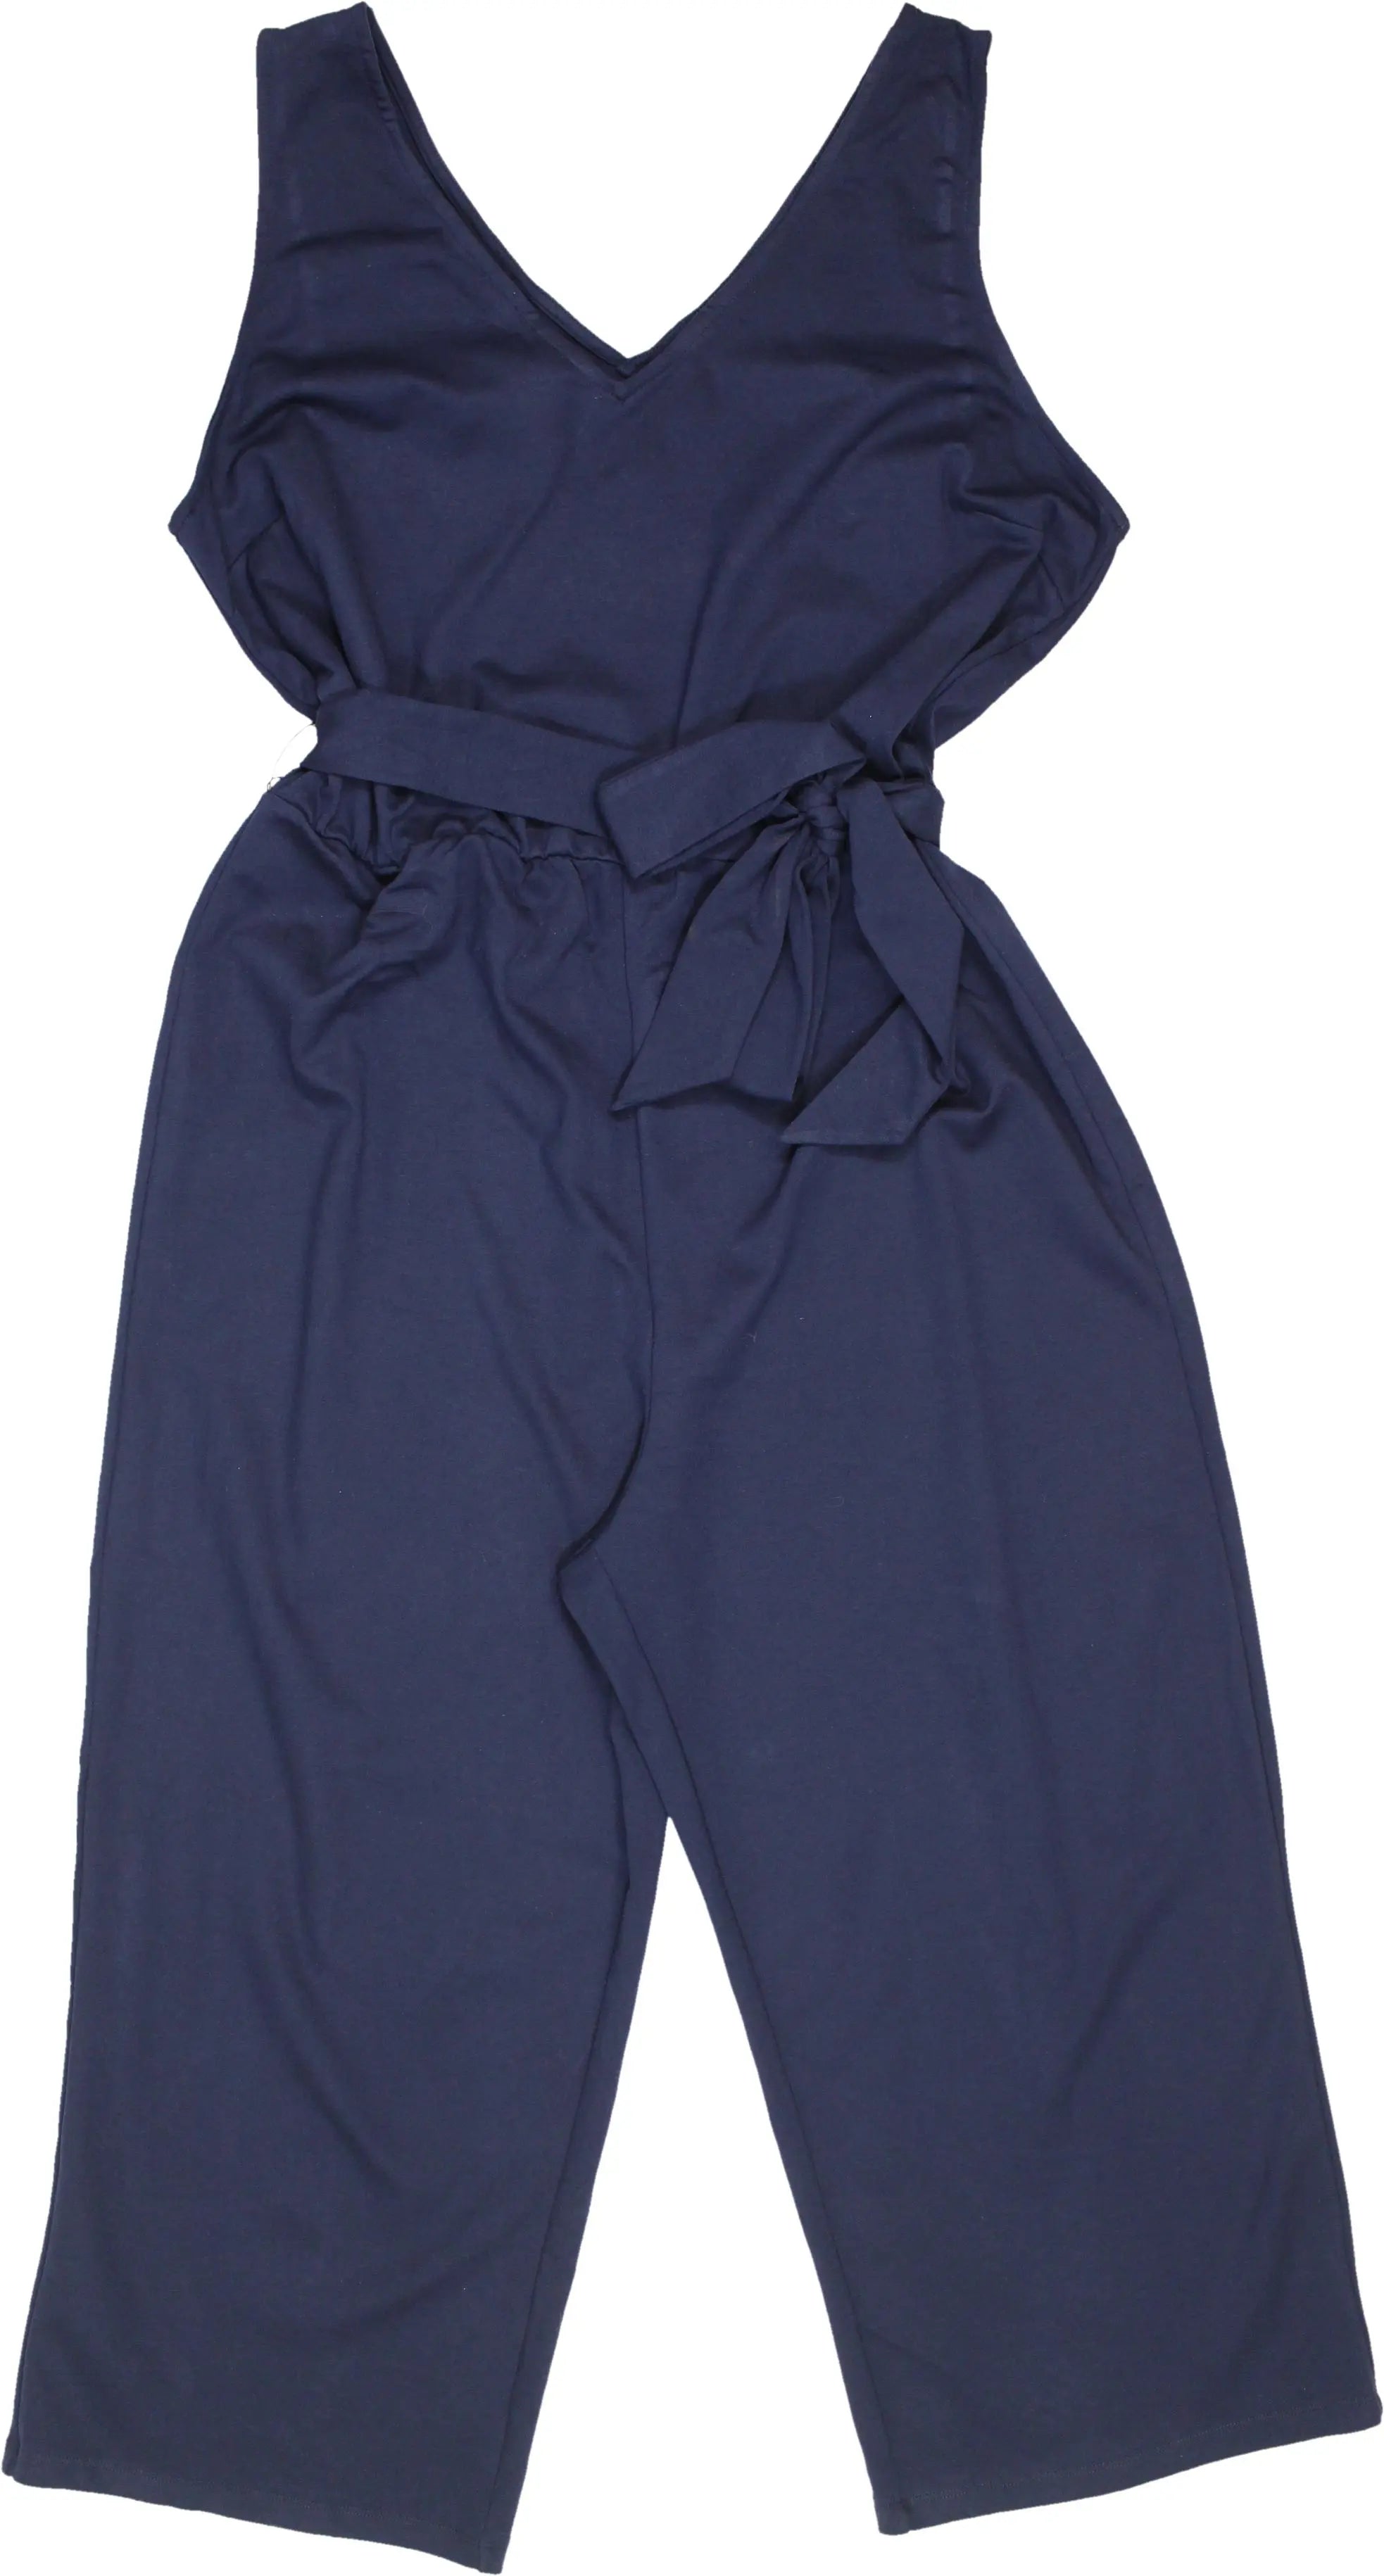 Popsugar - Blue Jumpsuit- ThriftTale.com - Vintage and second handclothing